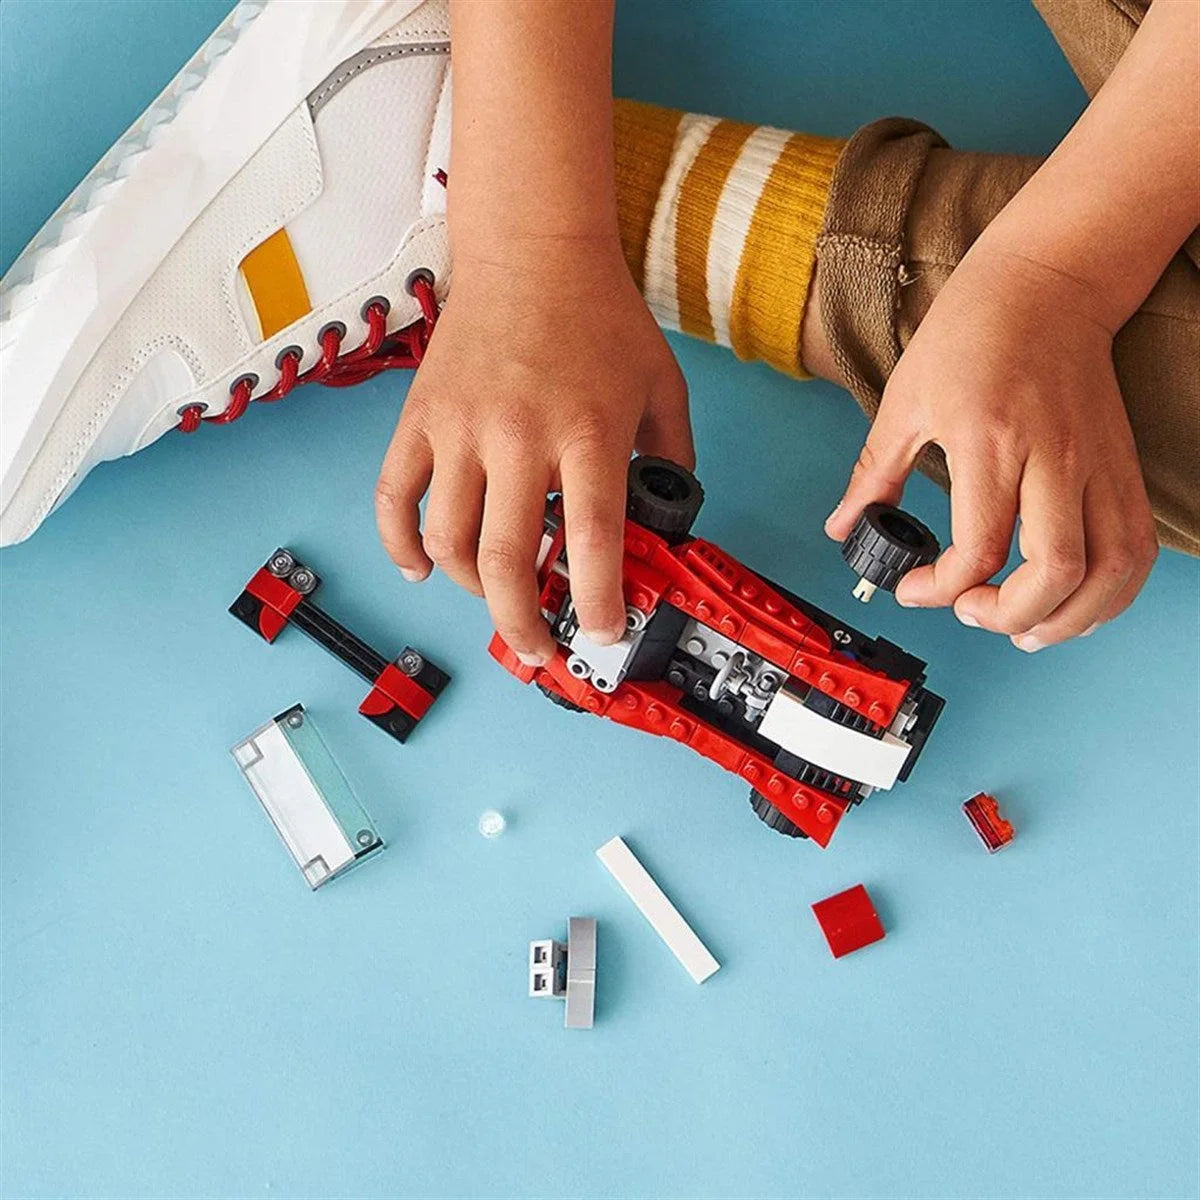 Lego Creator 3’ü 1 Arada Spor Araba 31100 | Toysall